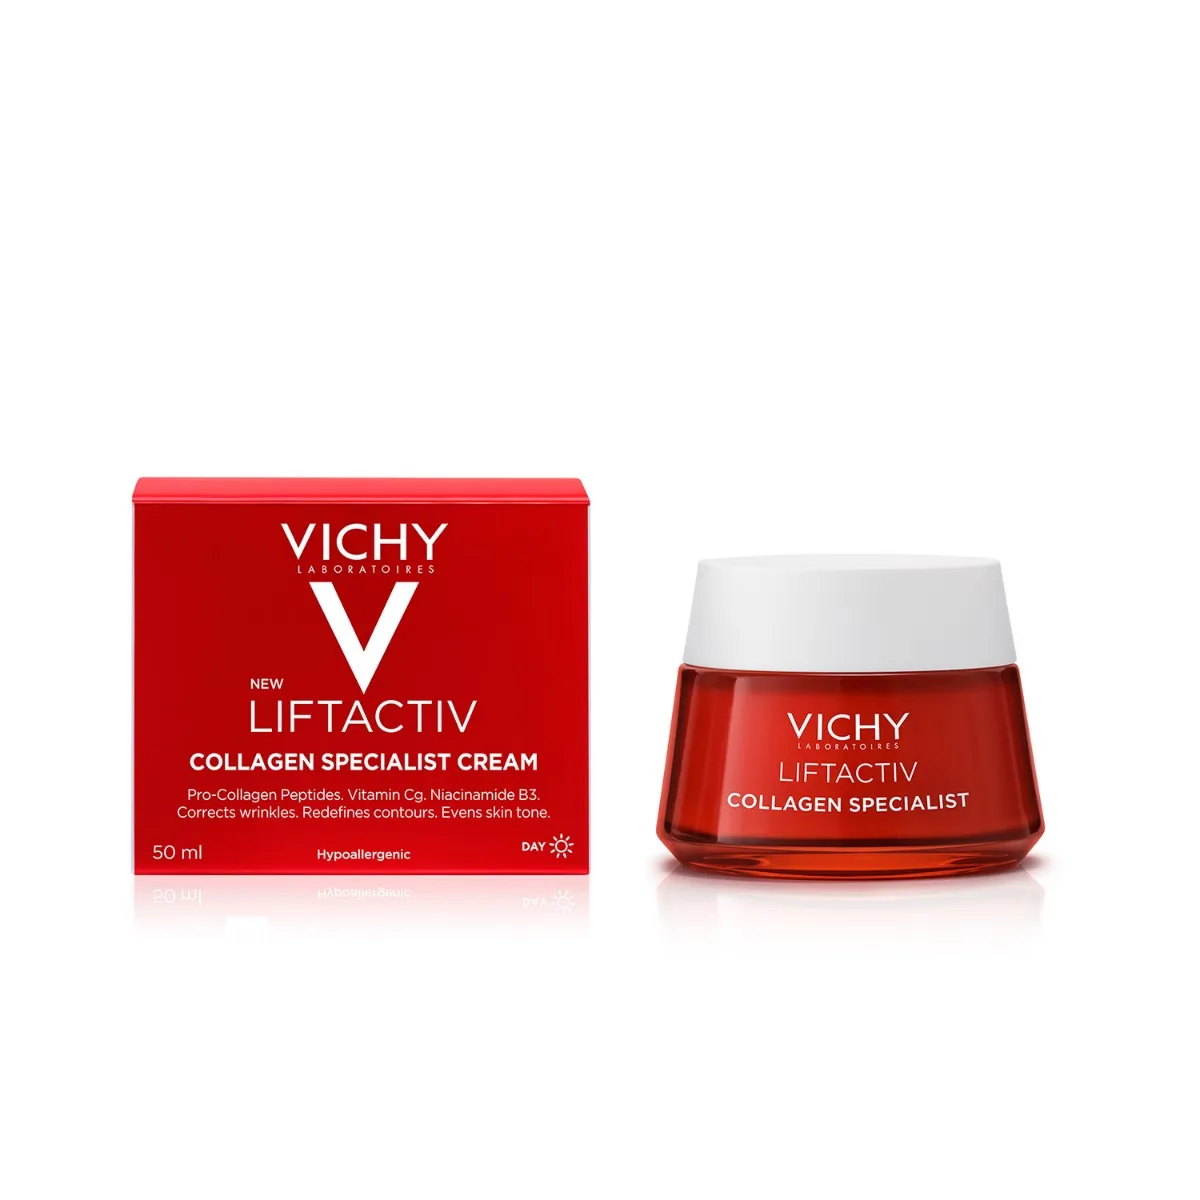 Vichy Liftactiv Collagen Specialist Krem na dzień, 50 ml 